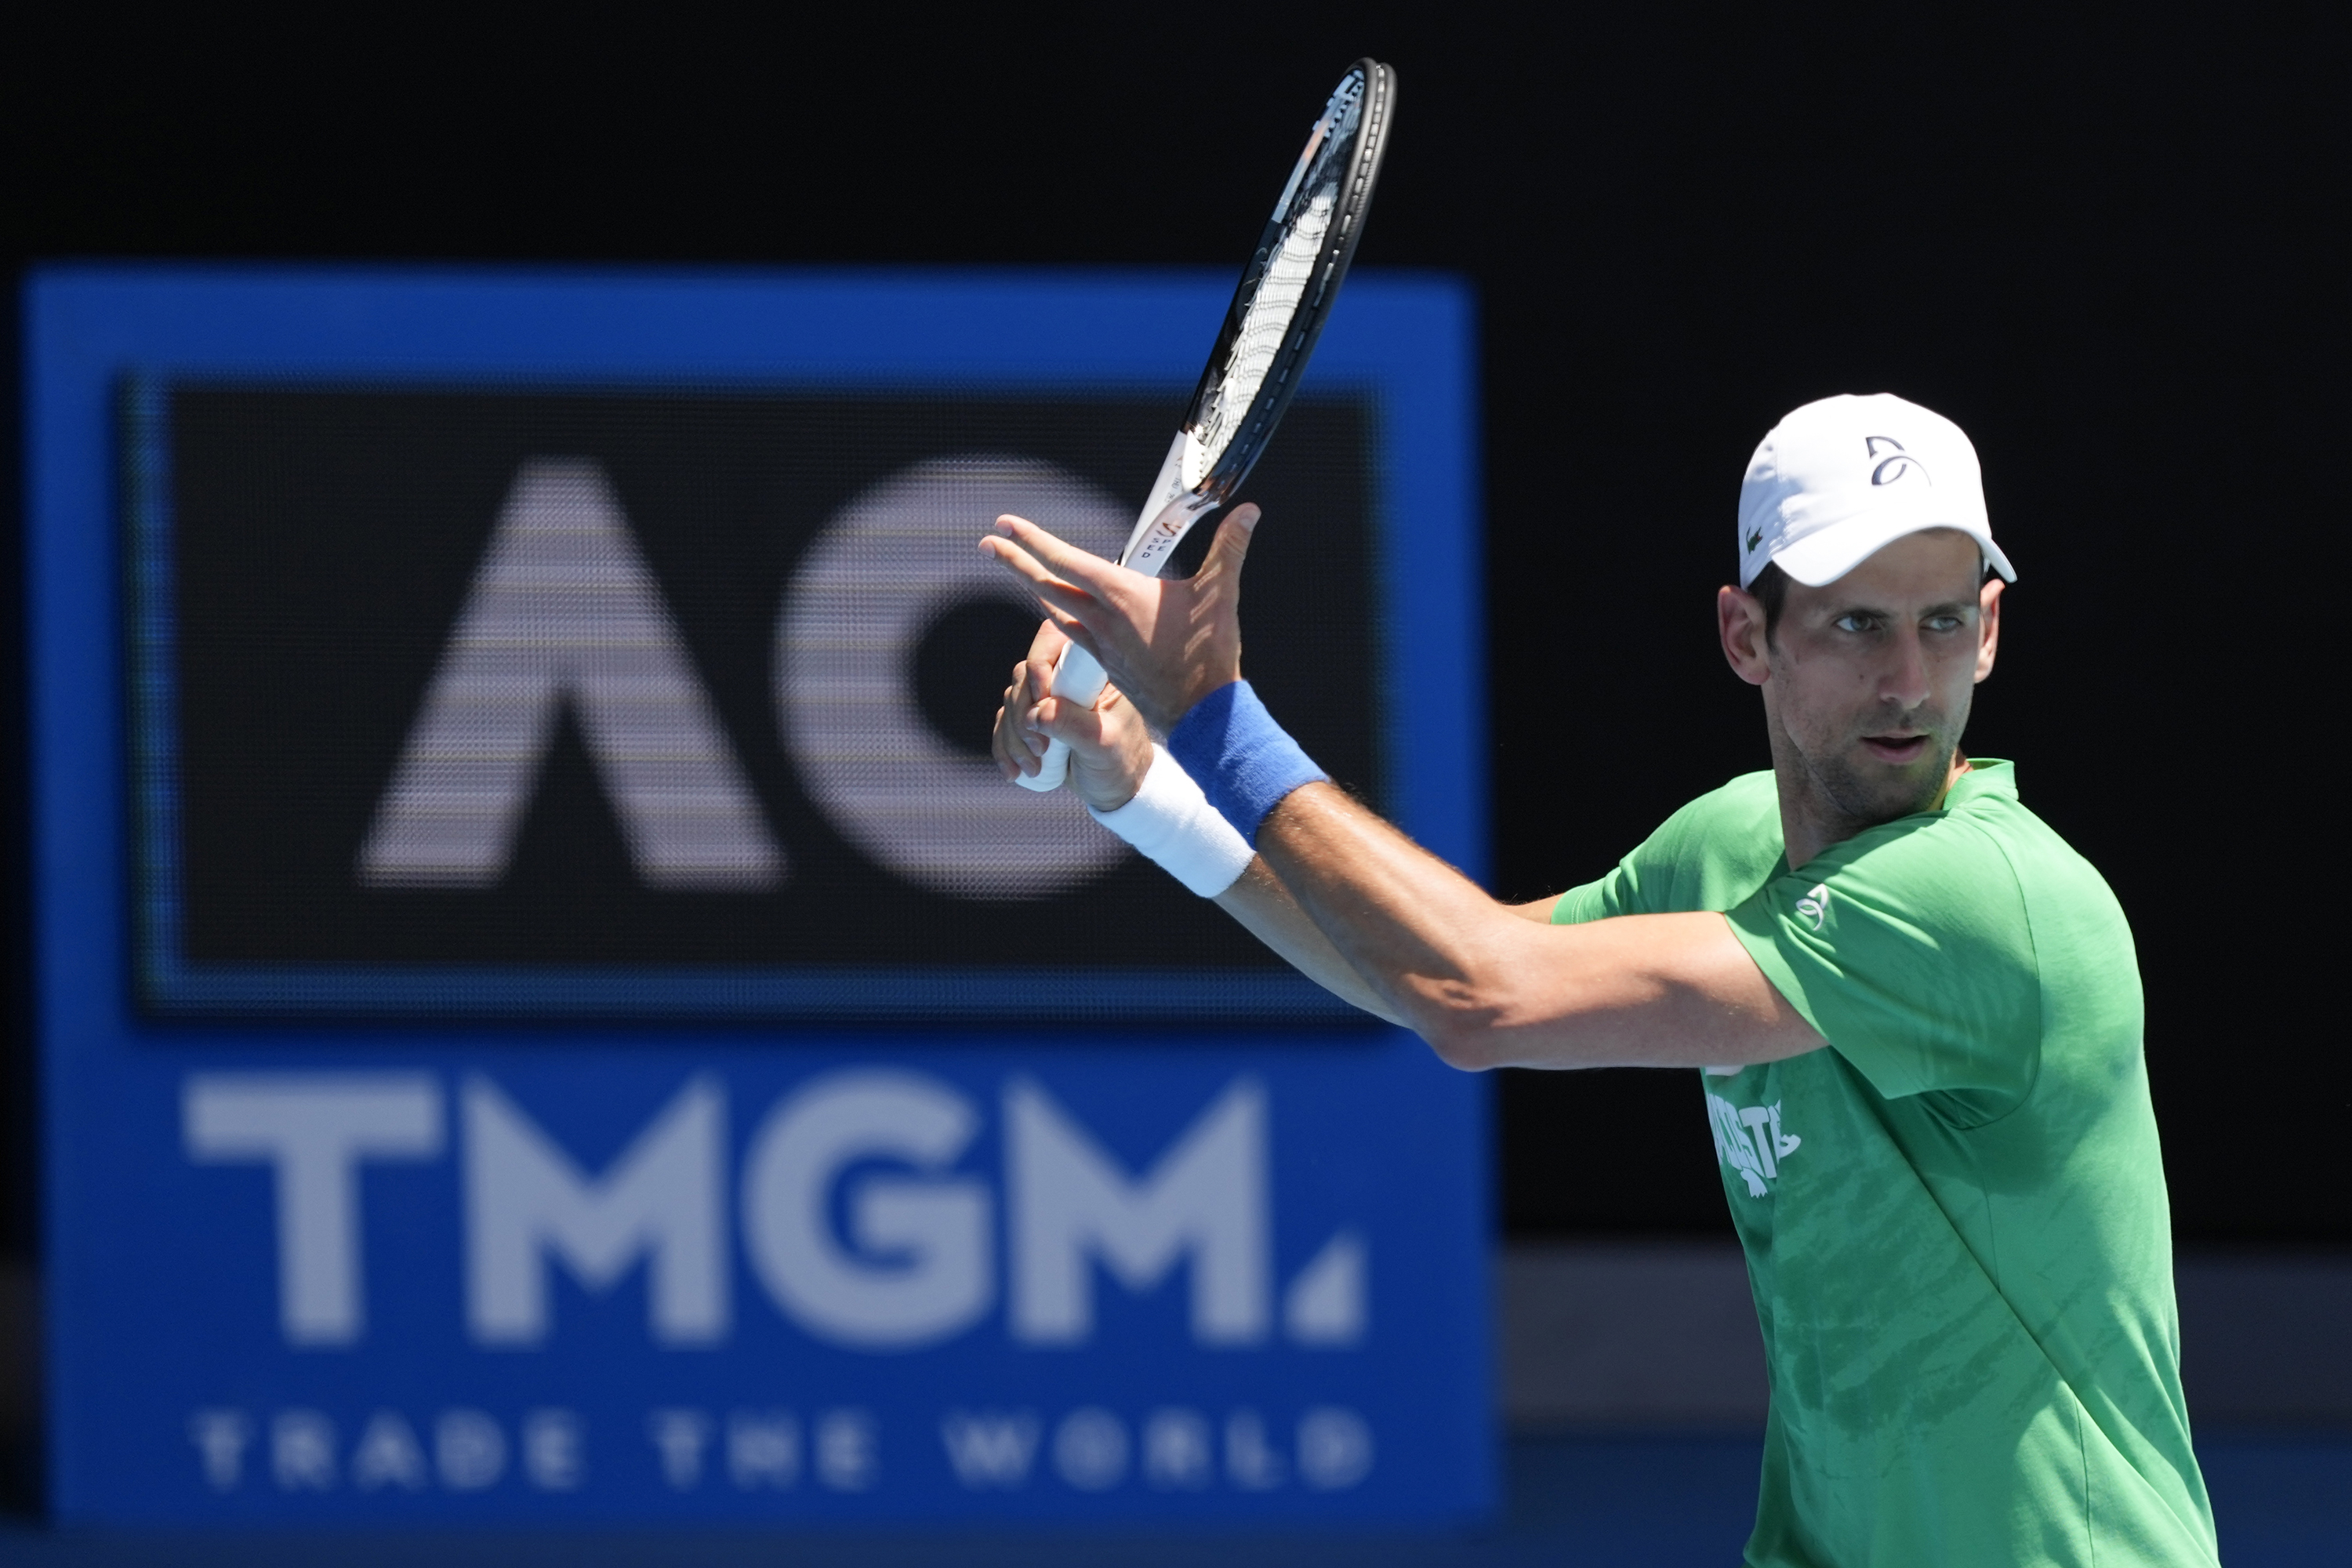 Nine-time Australian Open champion Novak Djokovic is scheduled to begin his title defense against fellow Serb Miomir Kecmanovic.